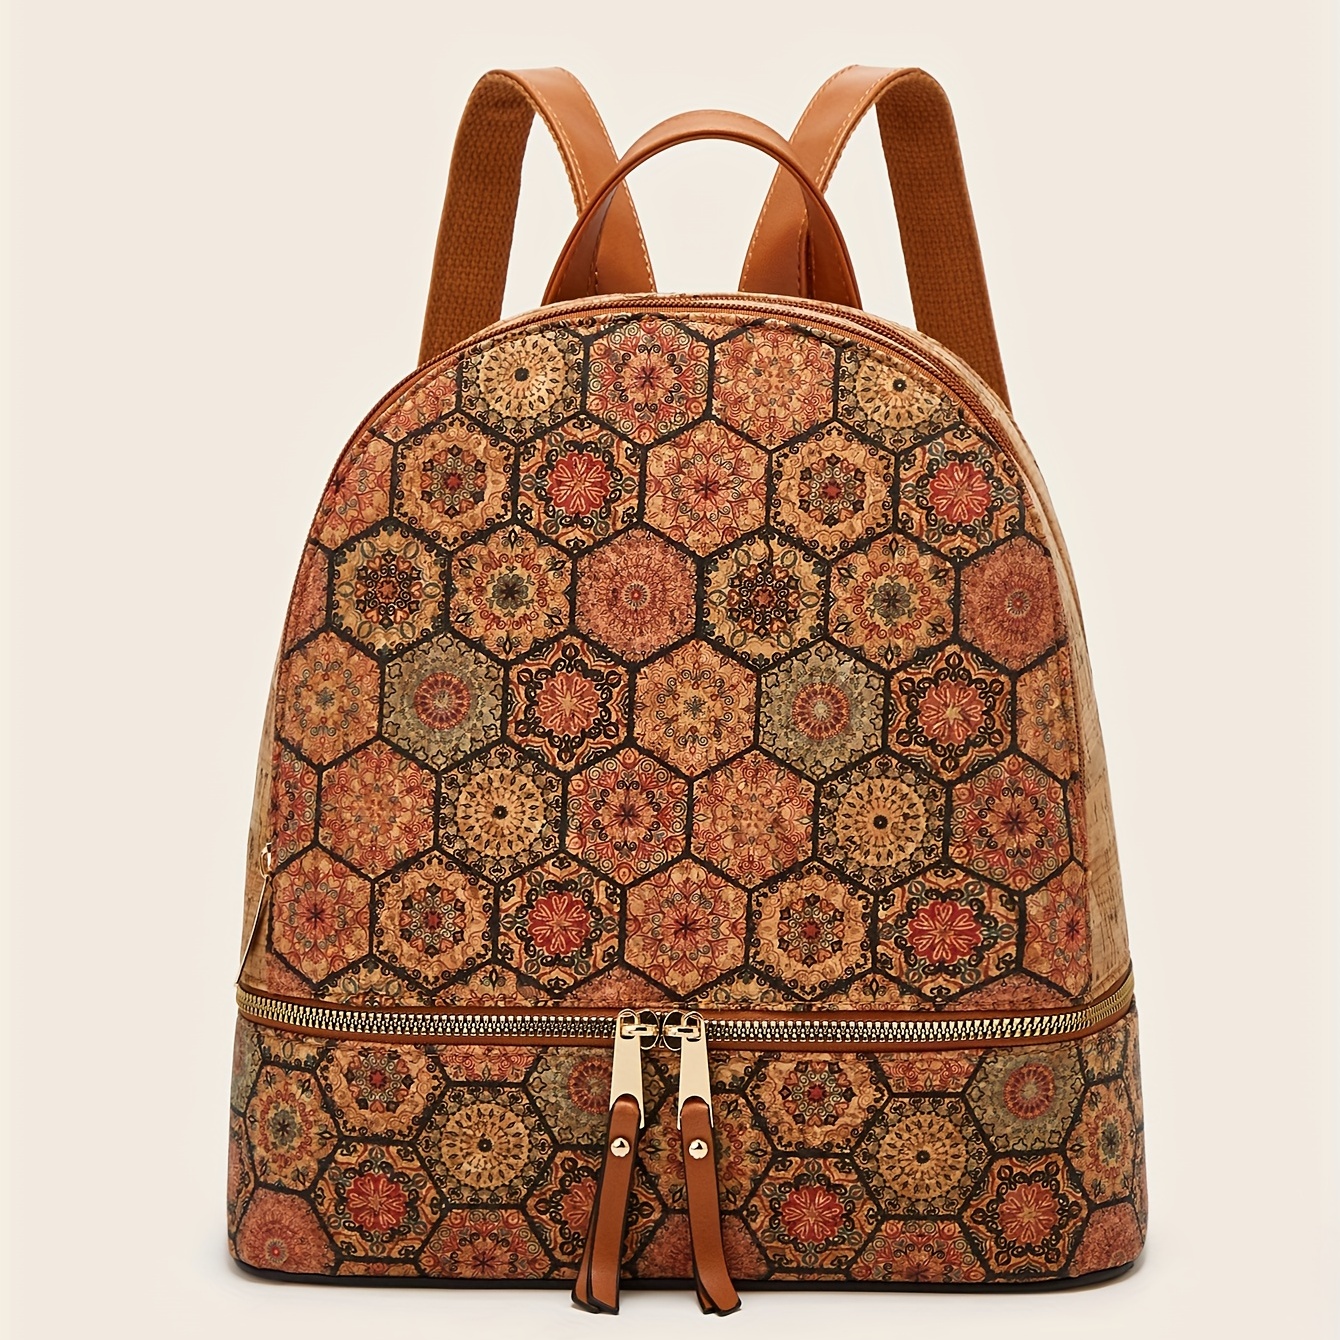 DKNY Women's Travel Bags - Bags